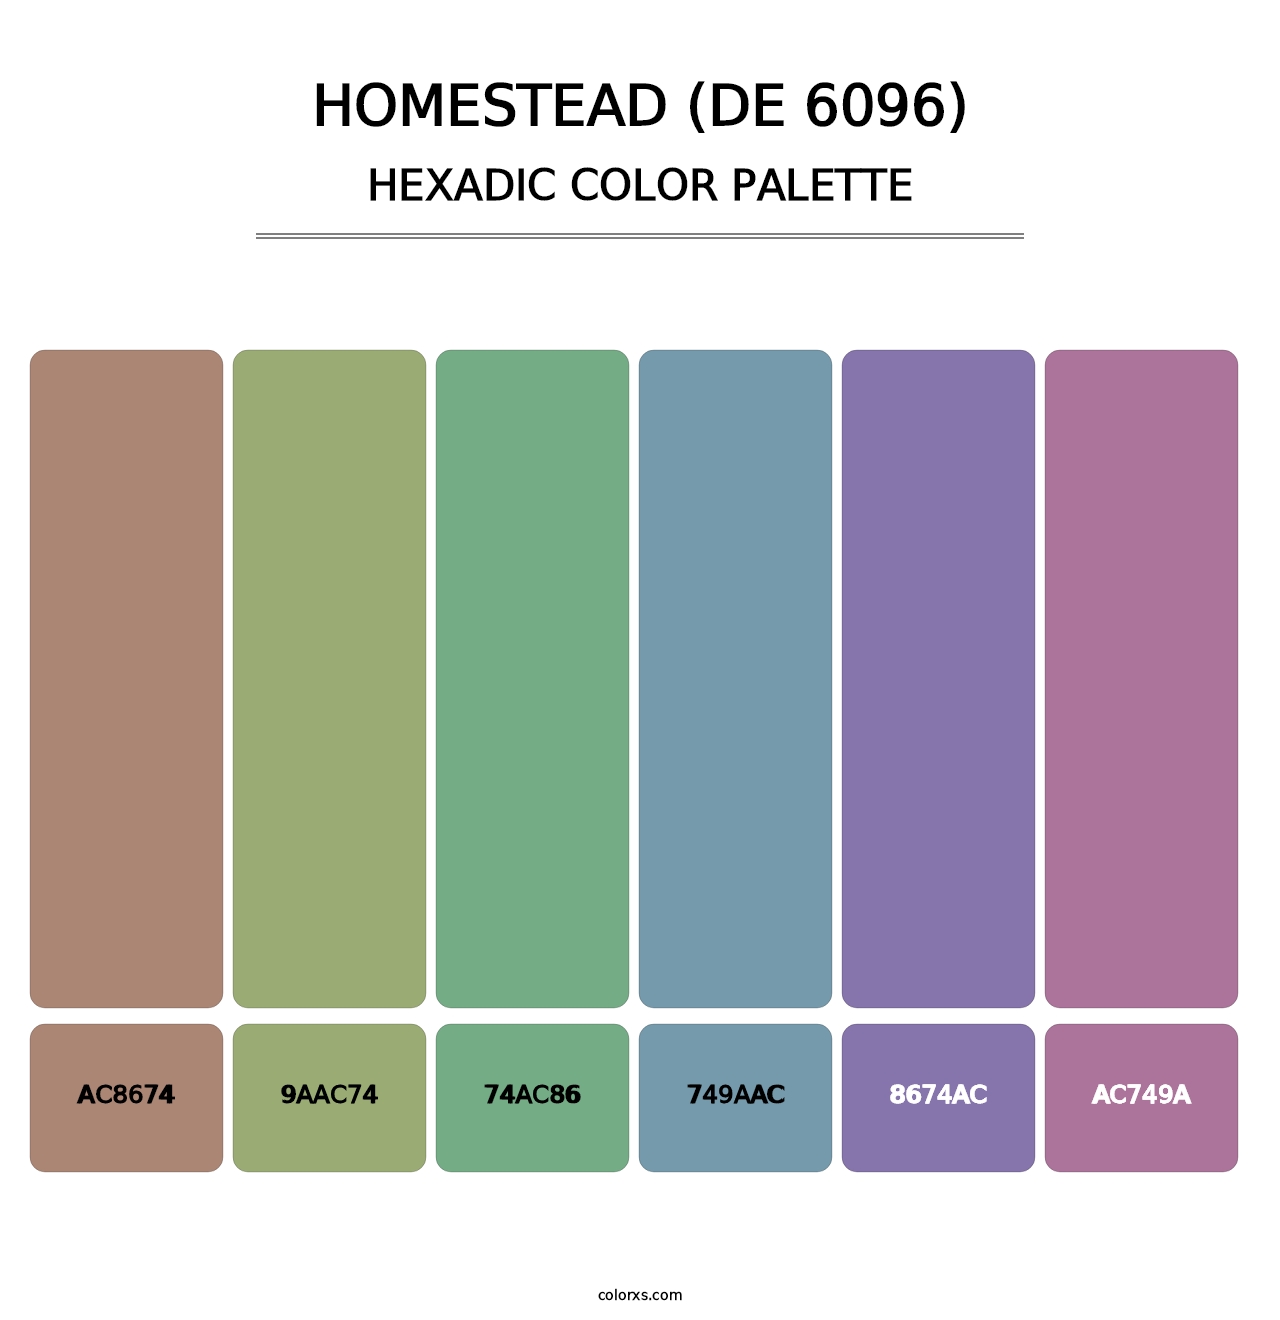 Homestead (DE 6096) - Hexadic Color Palette